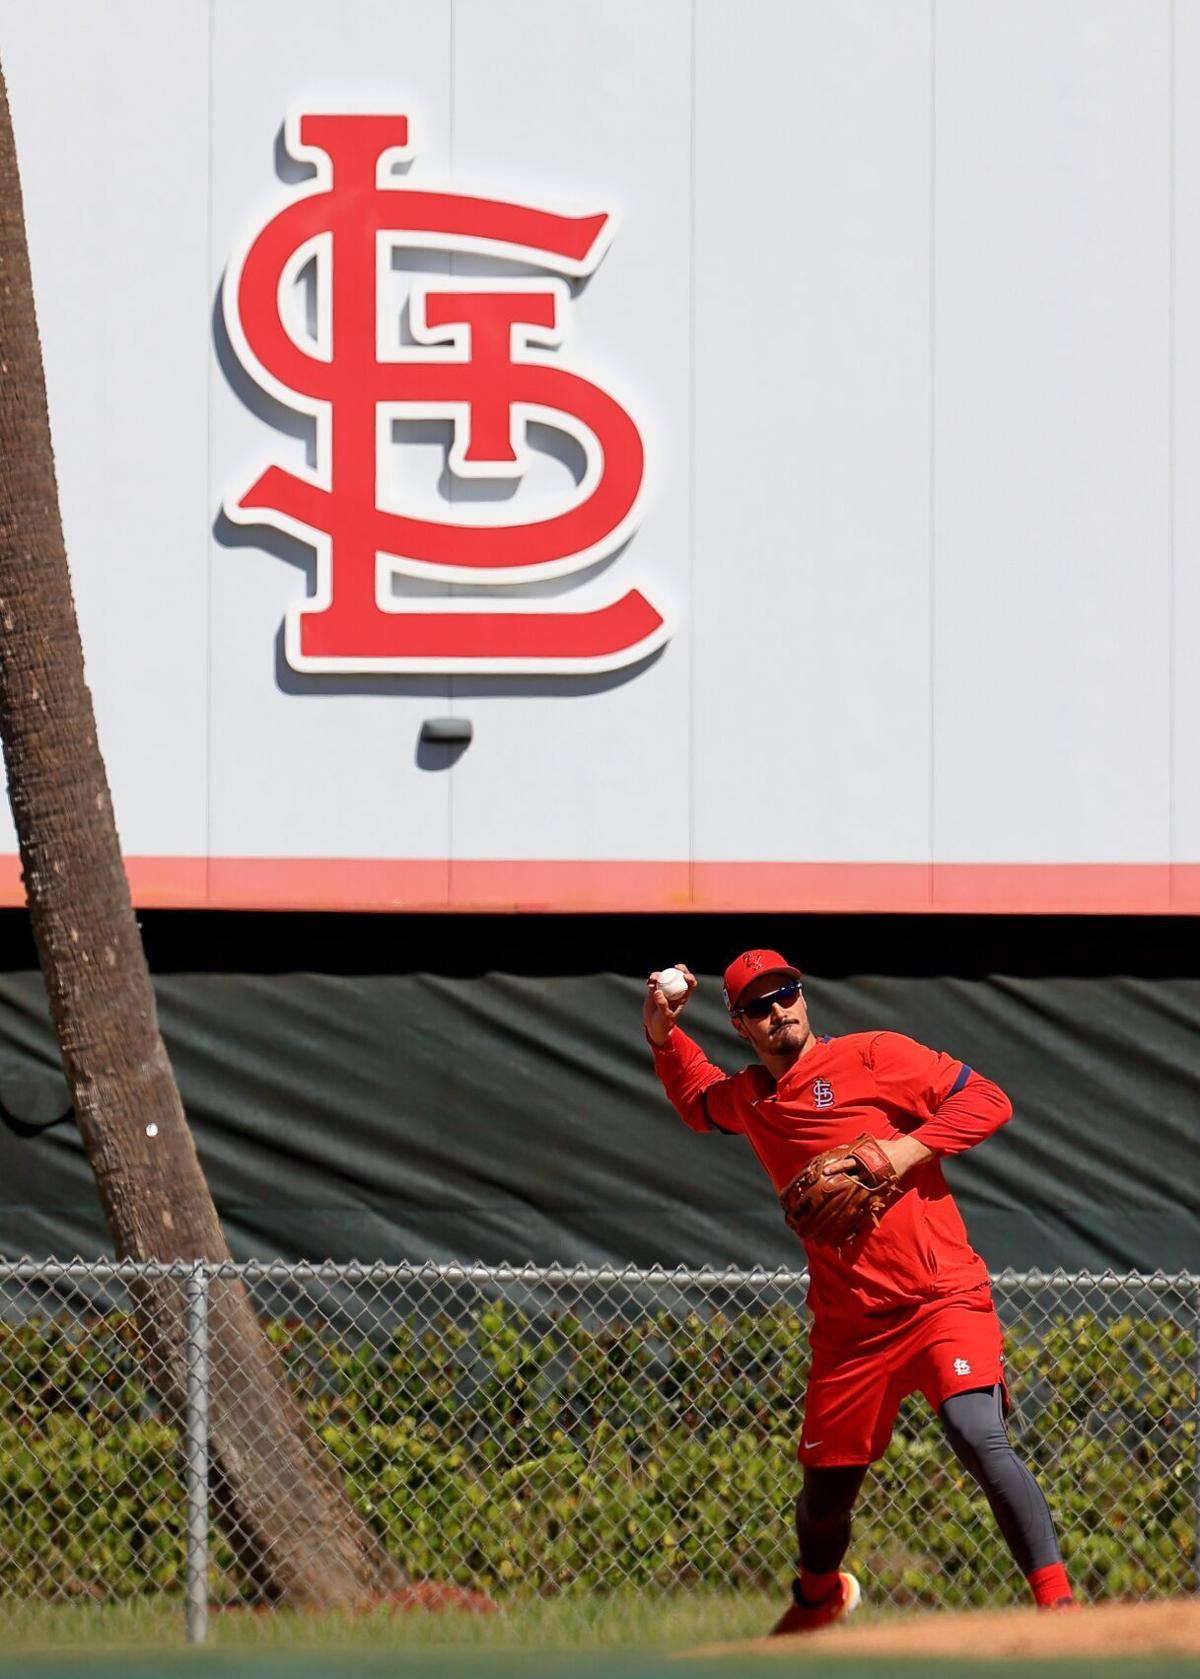 Hochman: A look from Jupiter at Cardinals catcher Willson